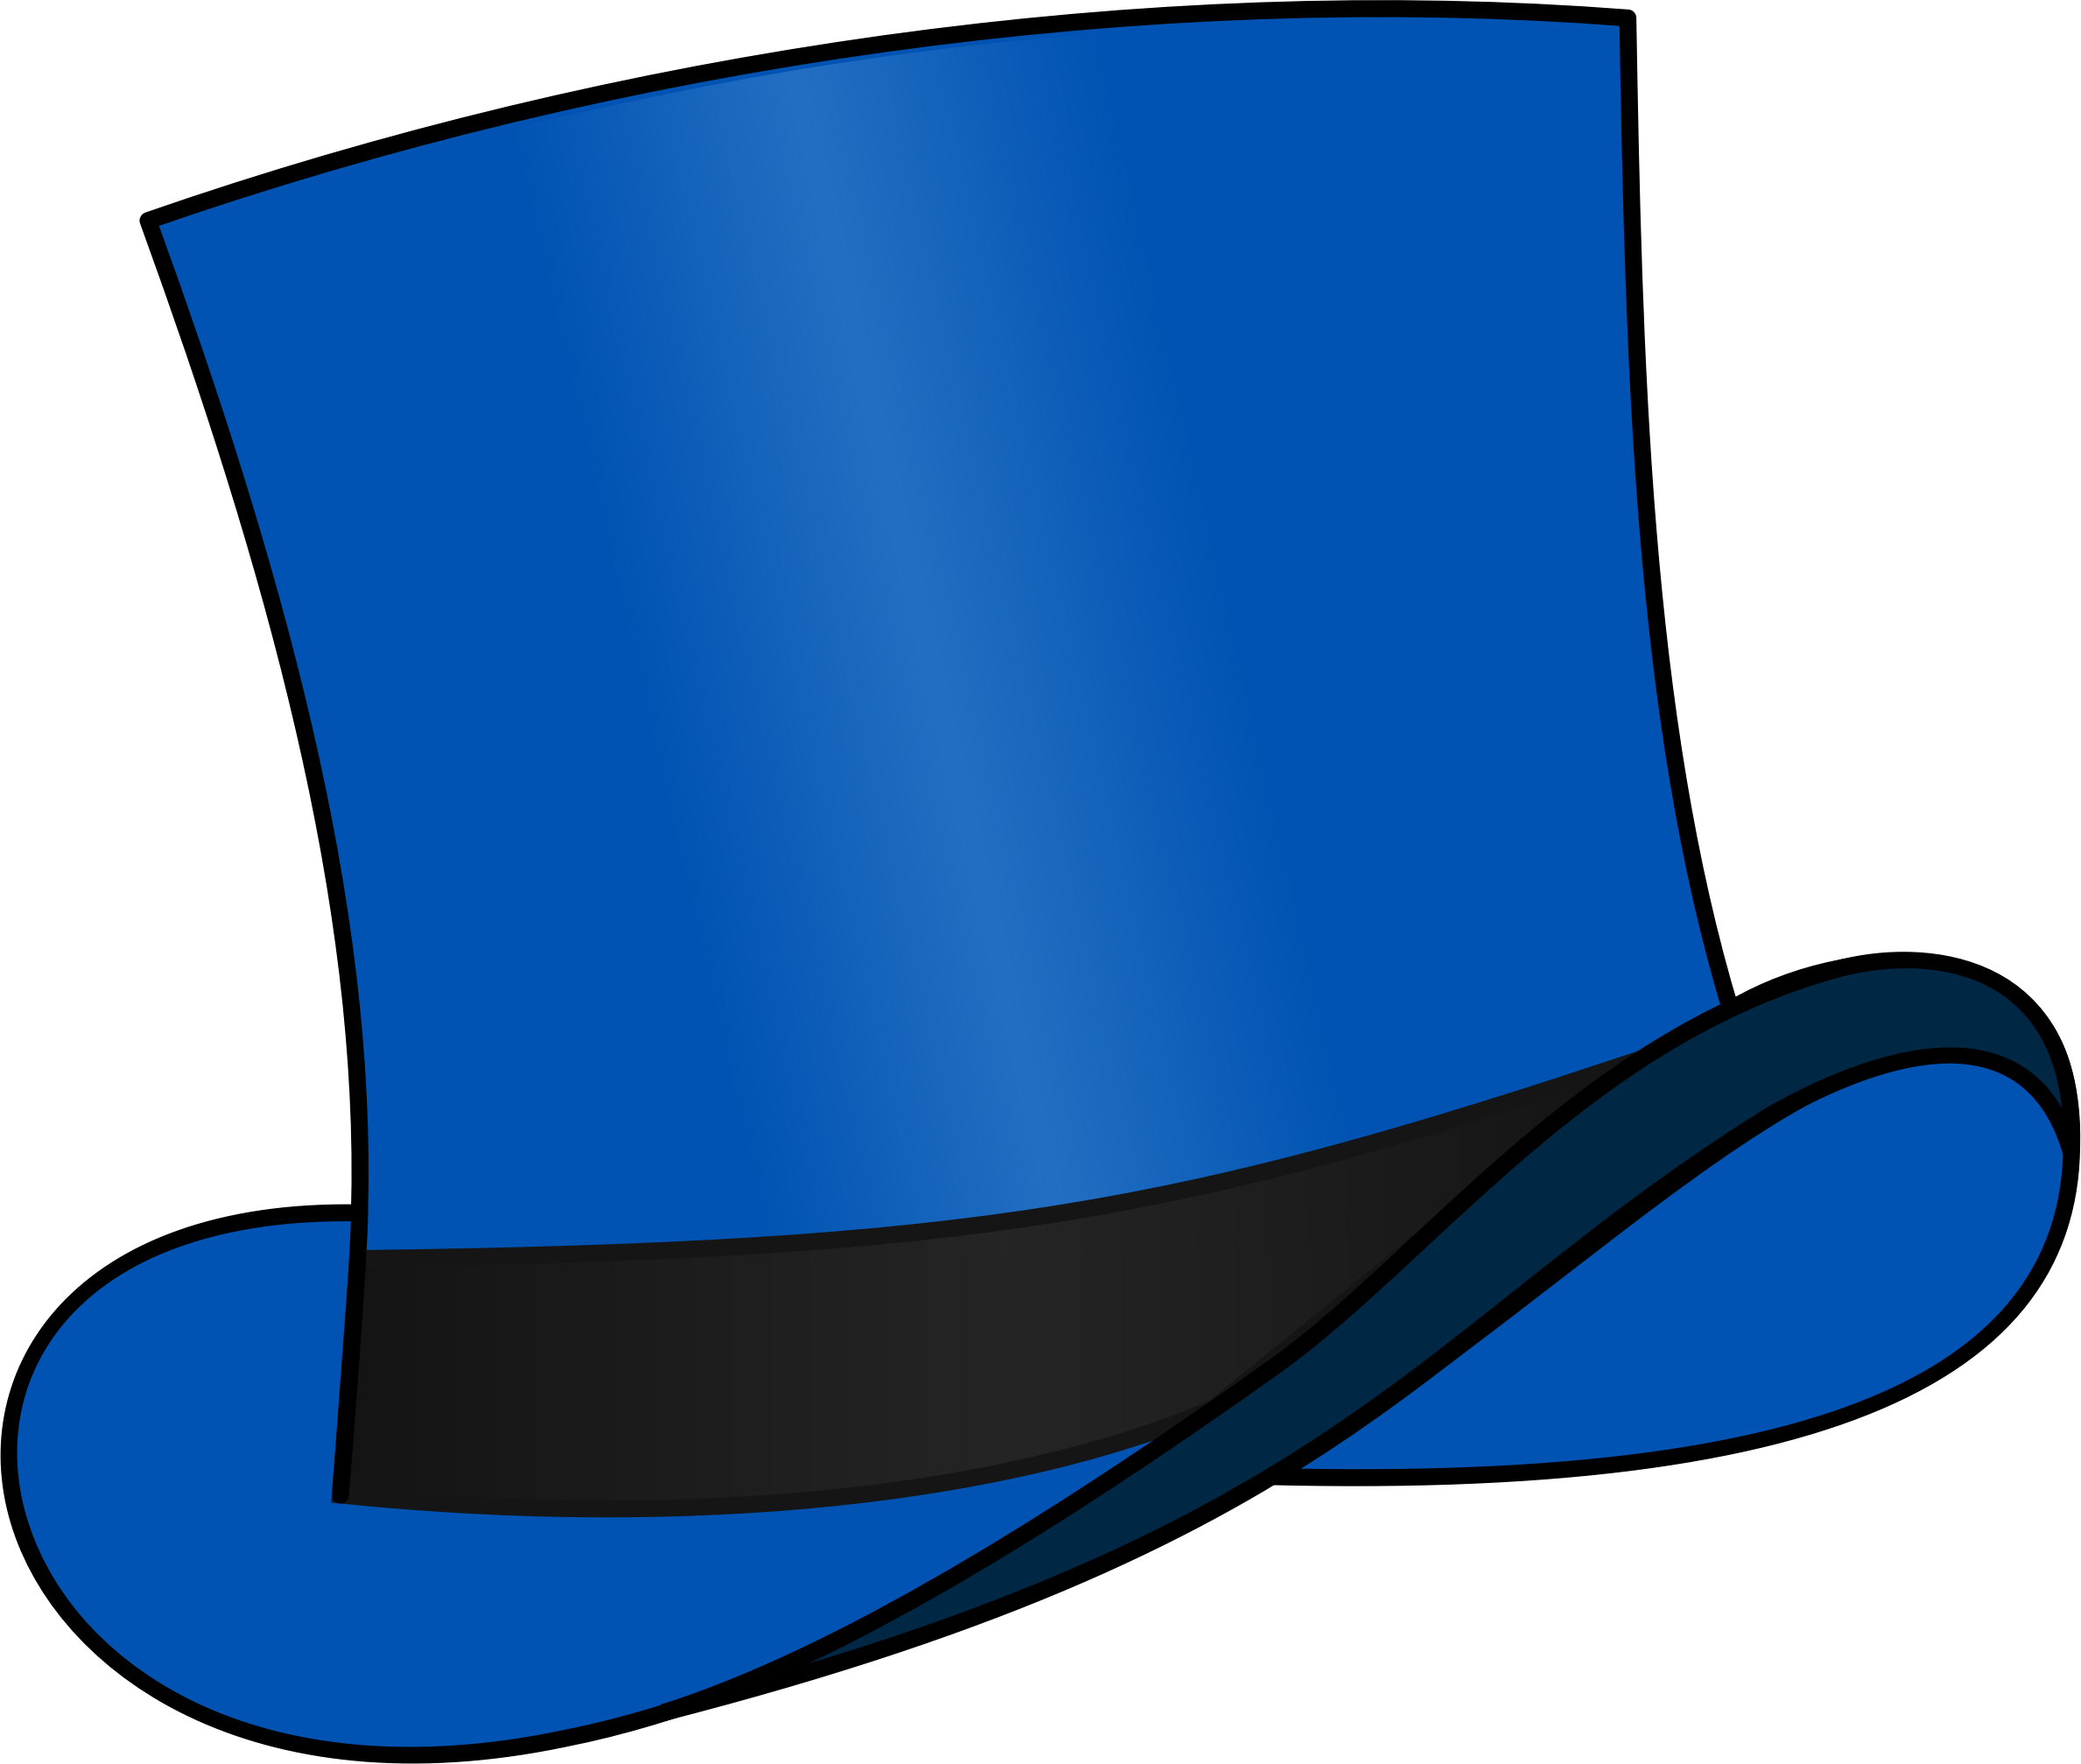 Партия шляп. Синяя шляпа Боно. Синяя шляпа э.де Боно:. Шляпа цилиндр. Шляпа мультяшная.